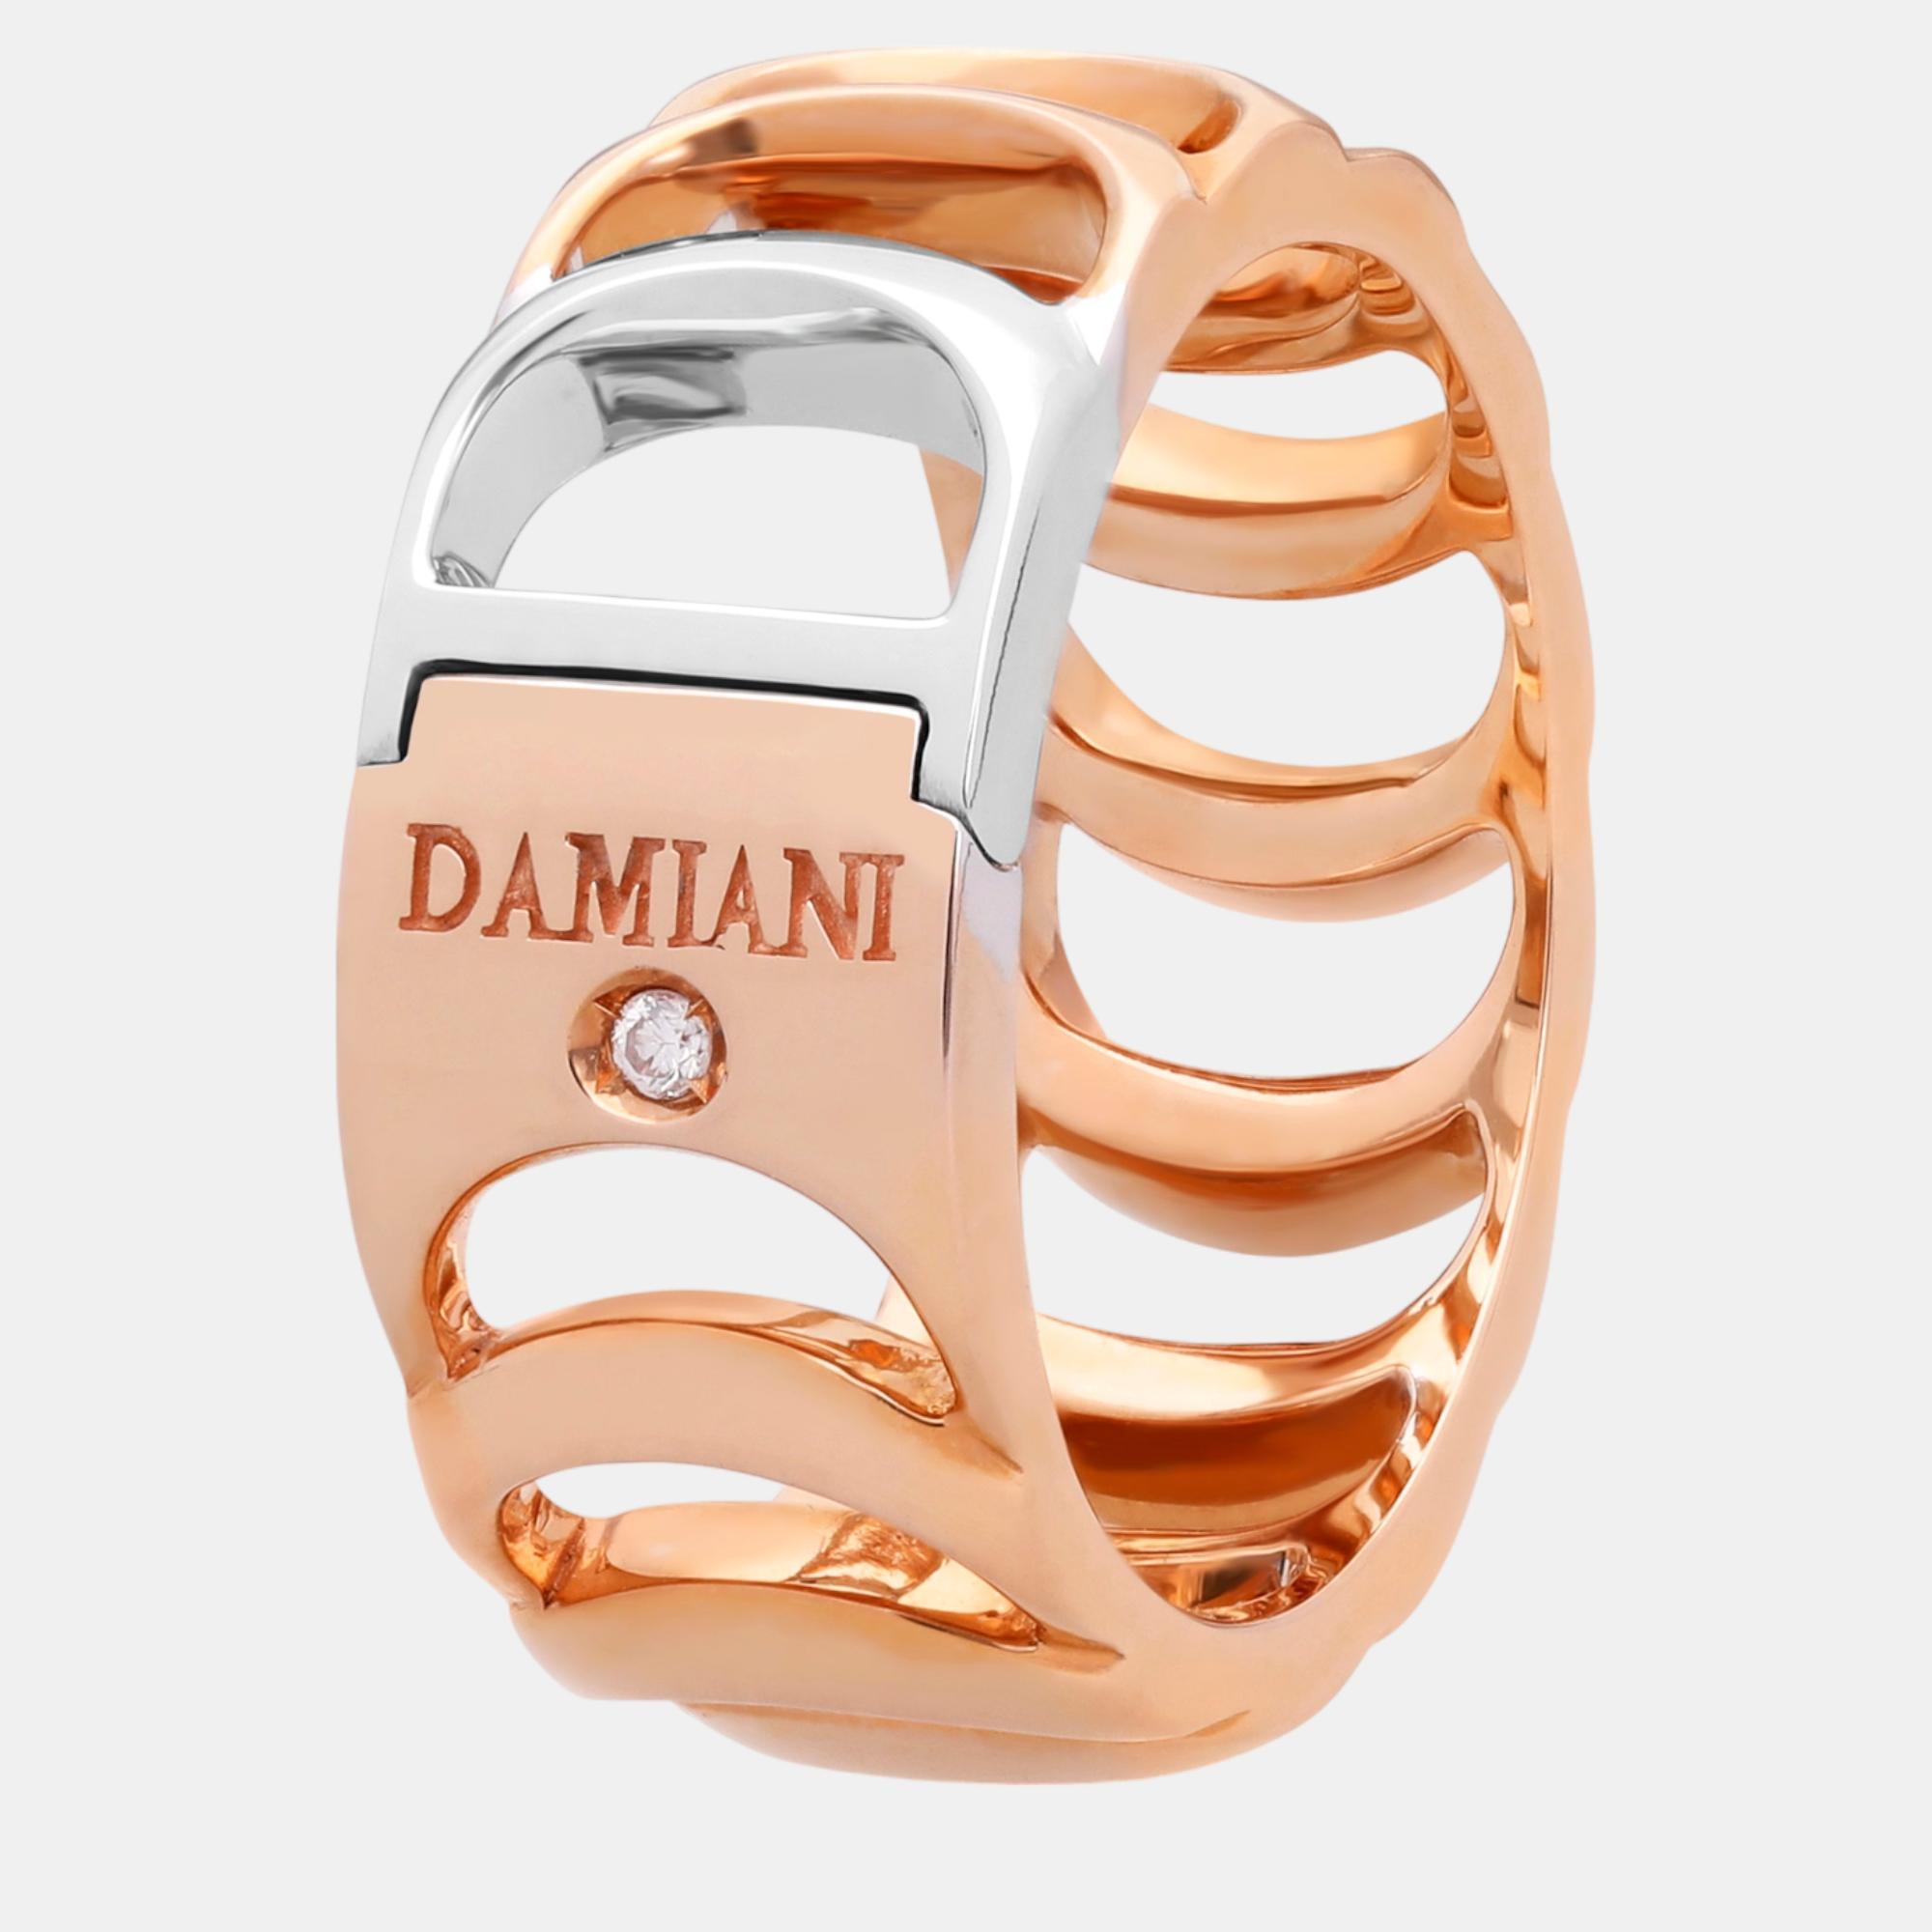 Damiani 18k rose gold and 18k white gold, diamond band ring